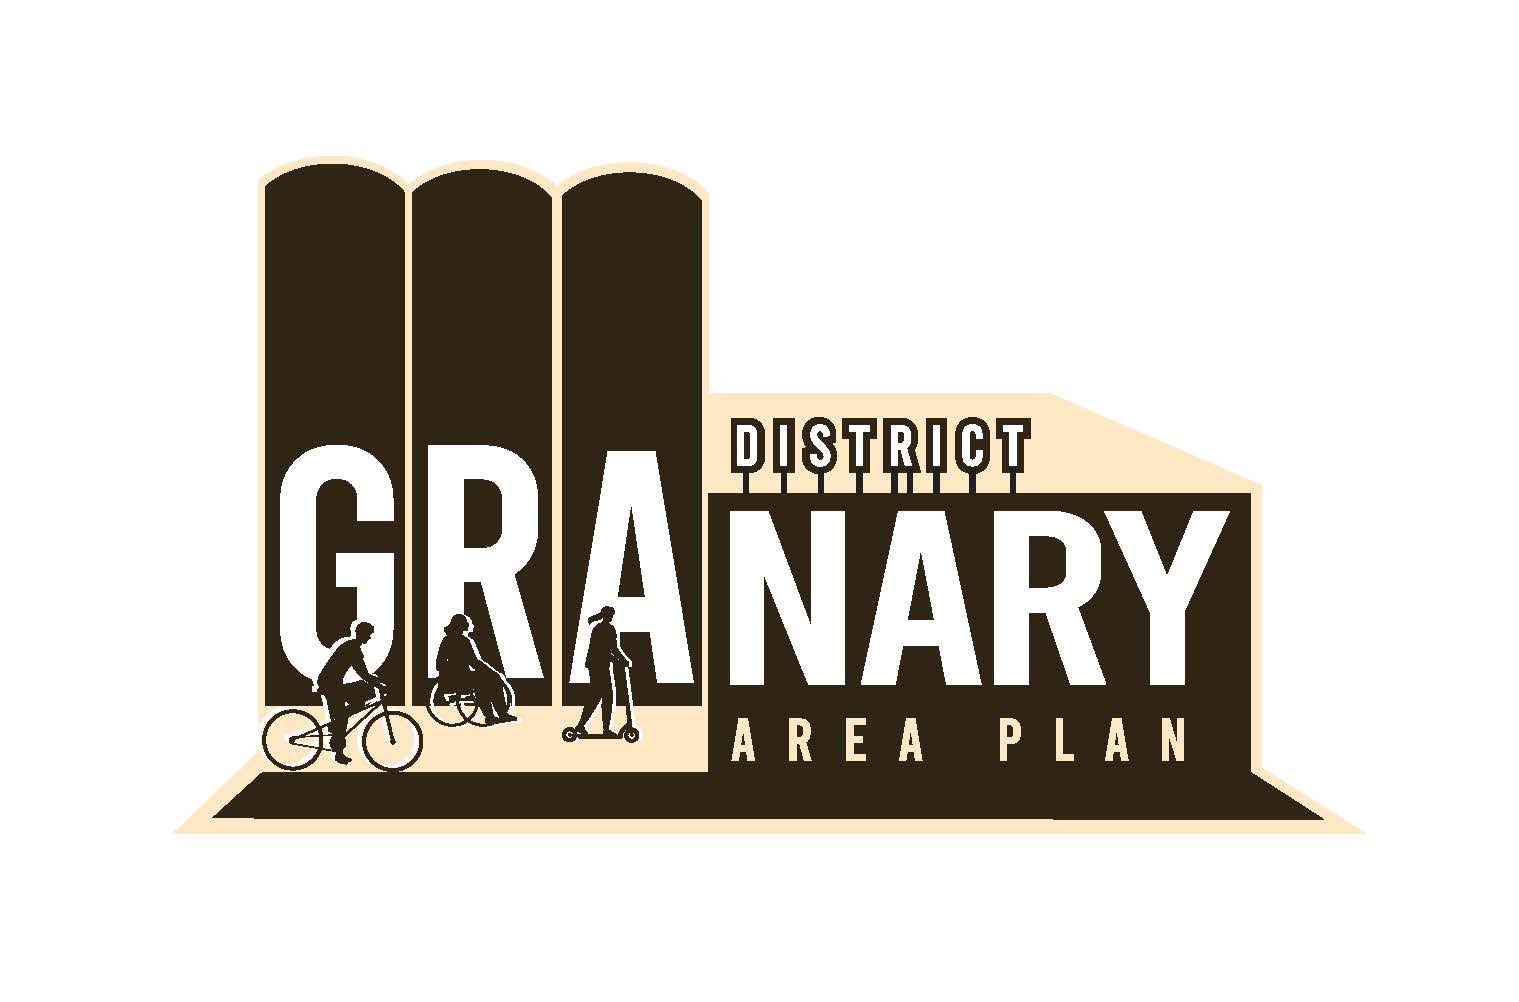 The Granary District Area Plan logo.